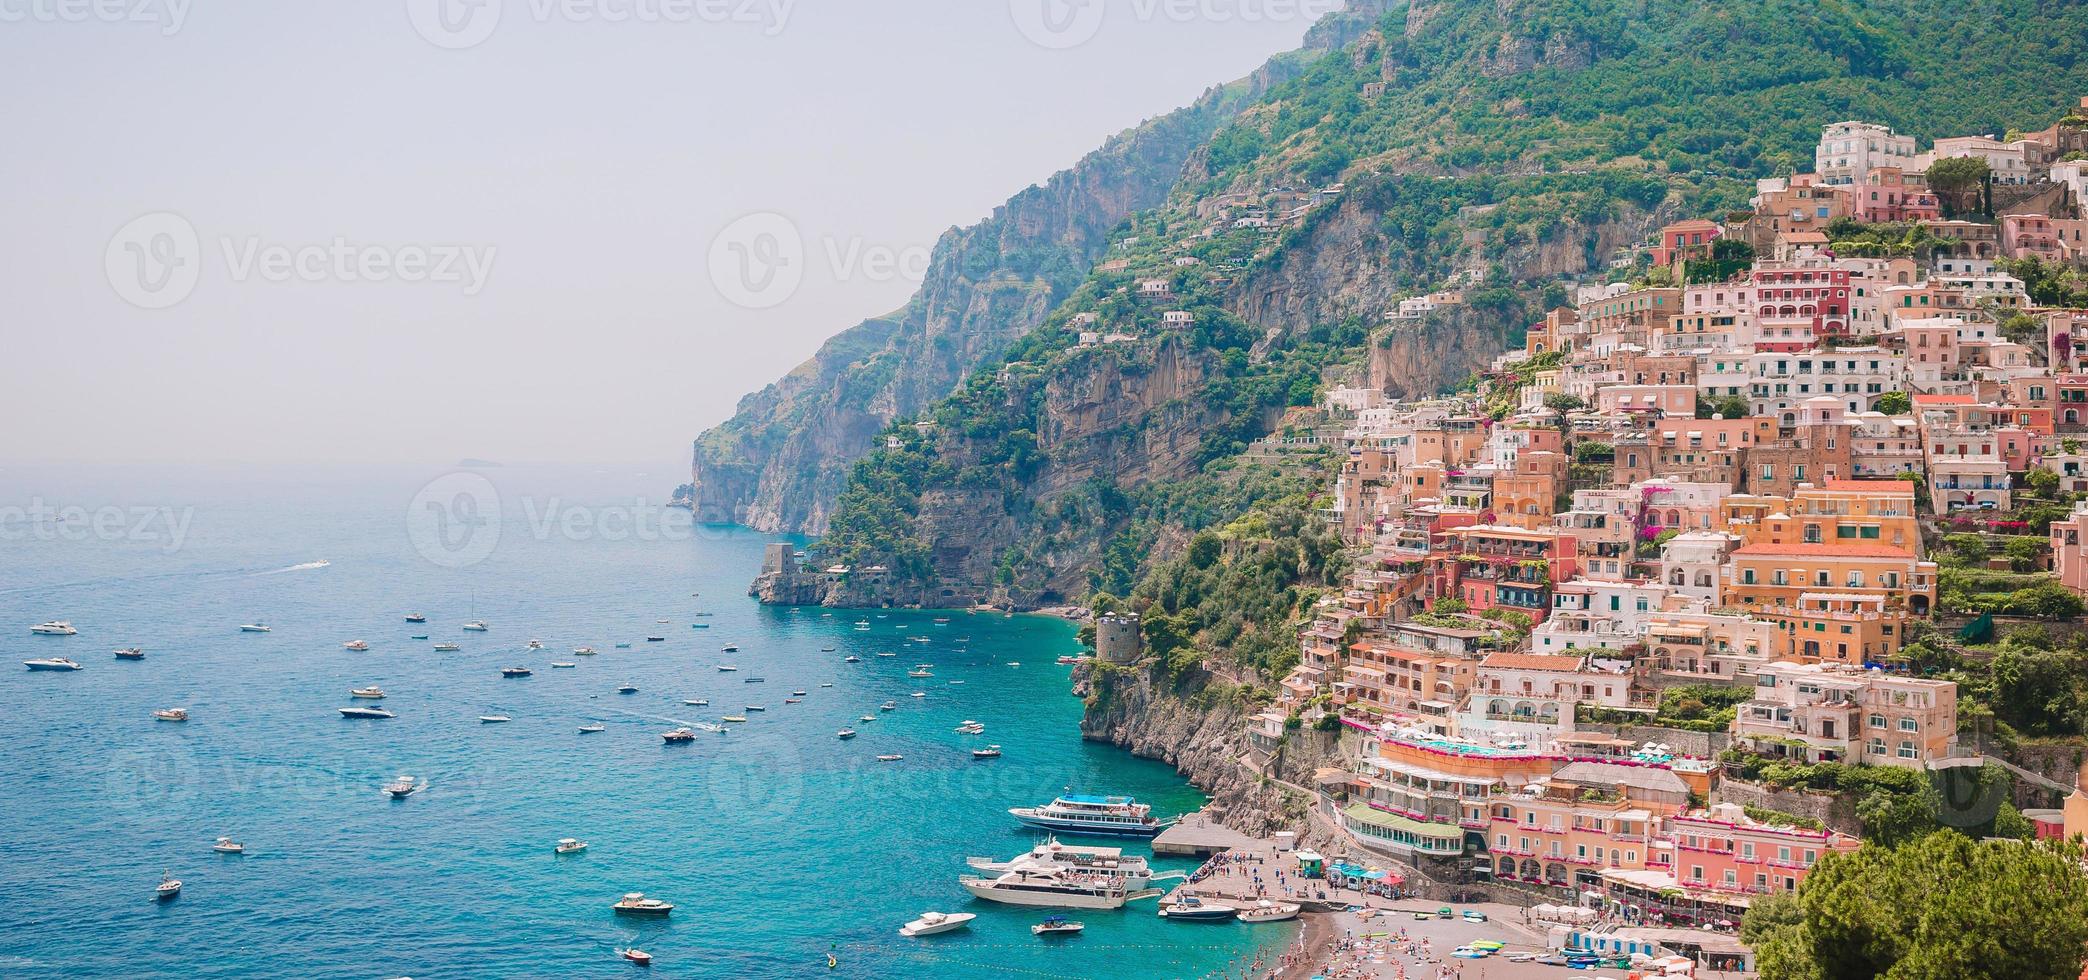 mooi kust- steden van Italië - toneel- positano in amalfi kust foto